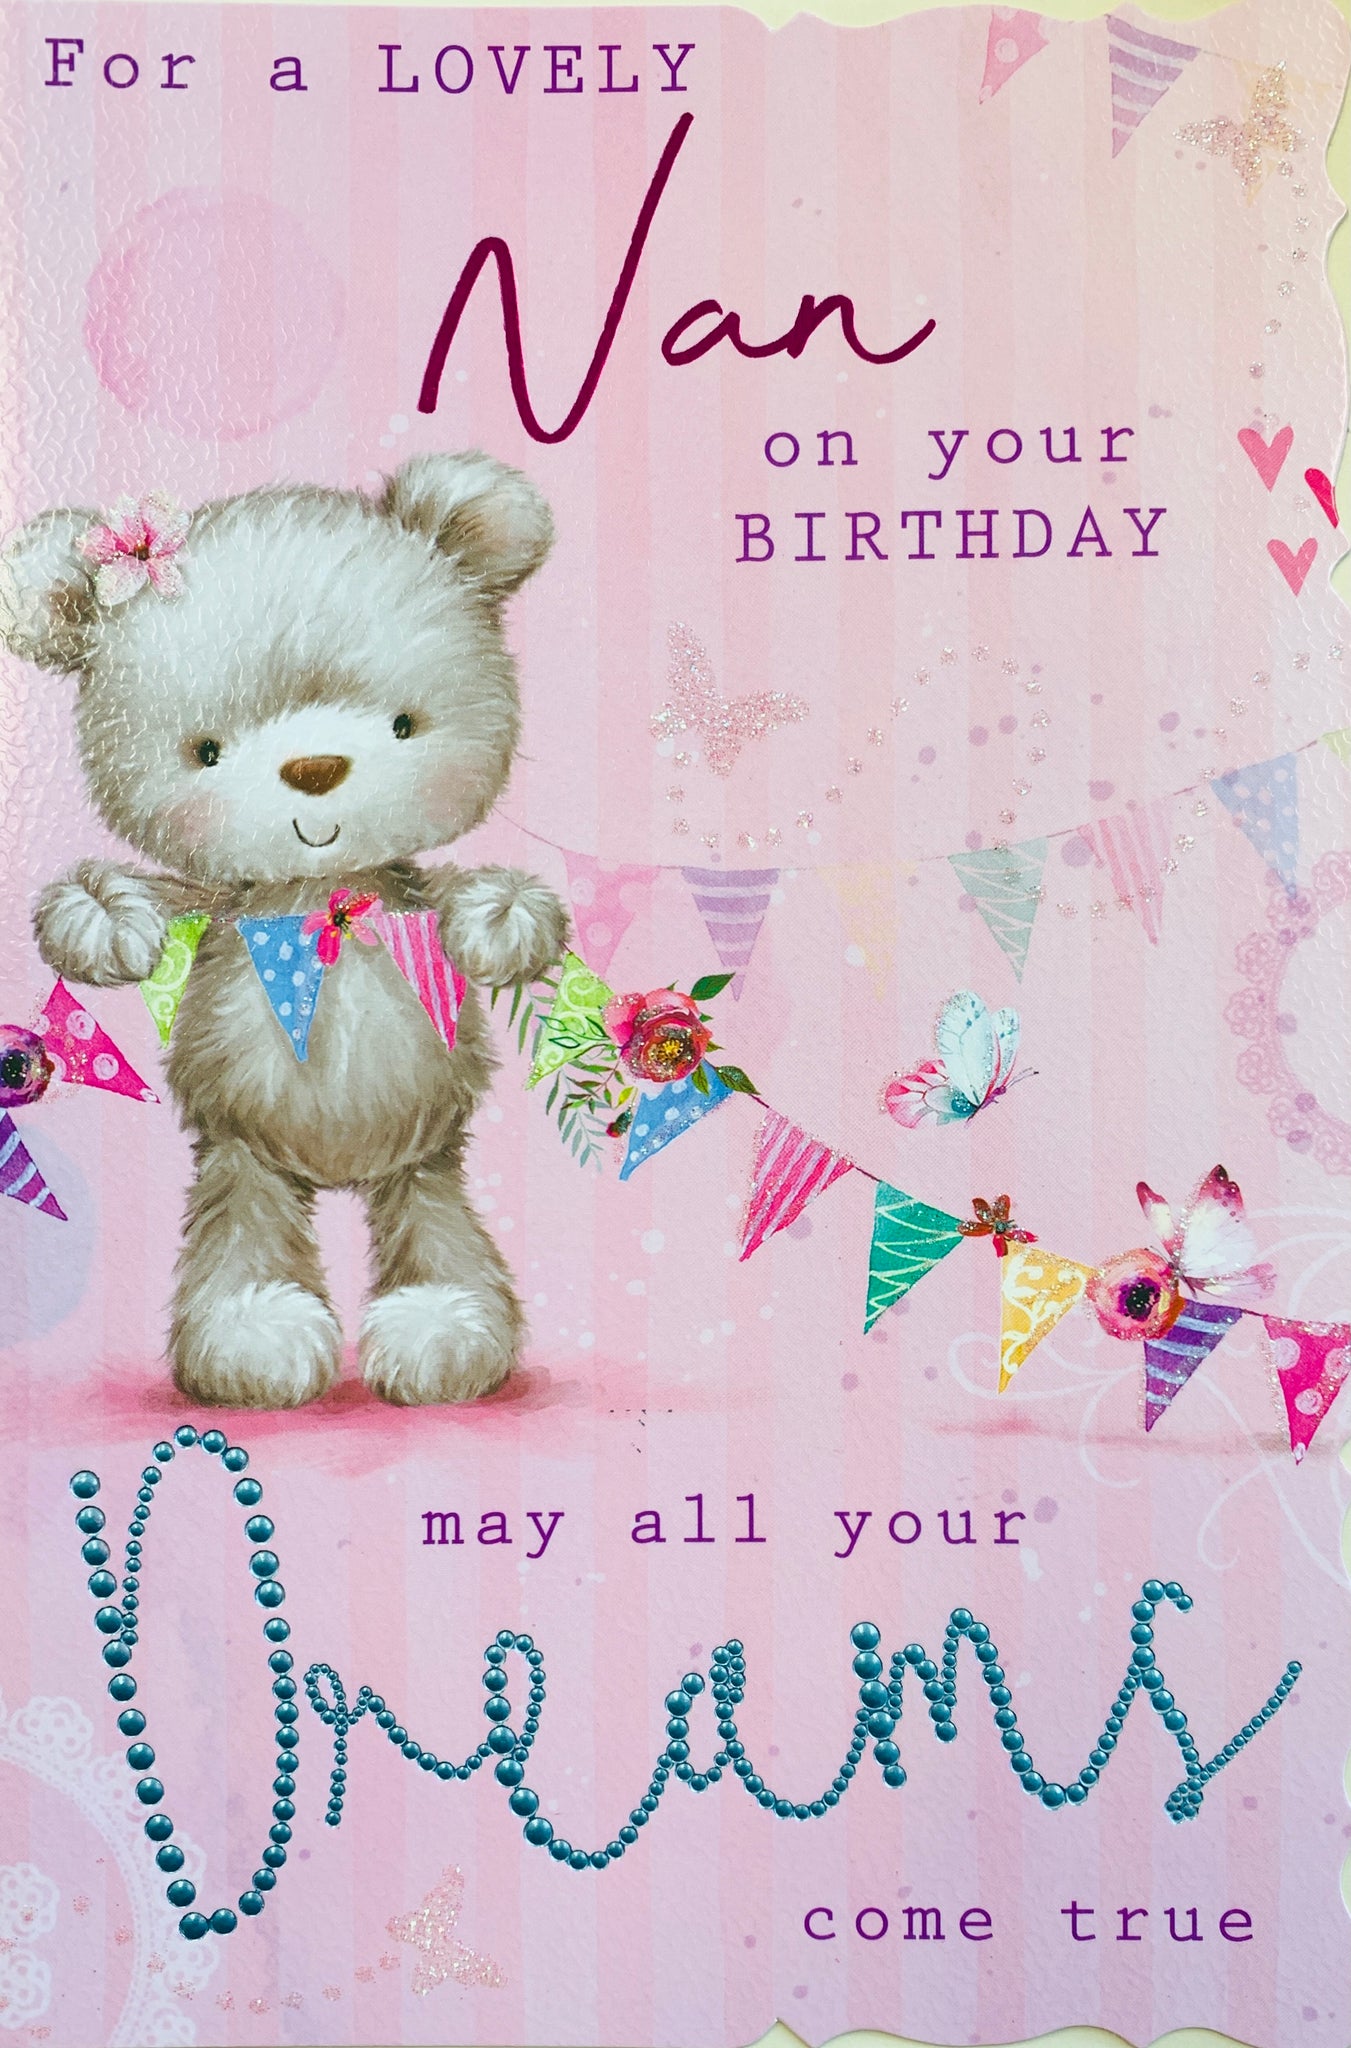 Nan birthday card - cute bear